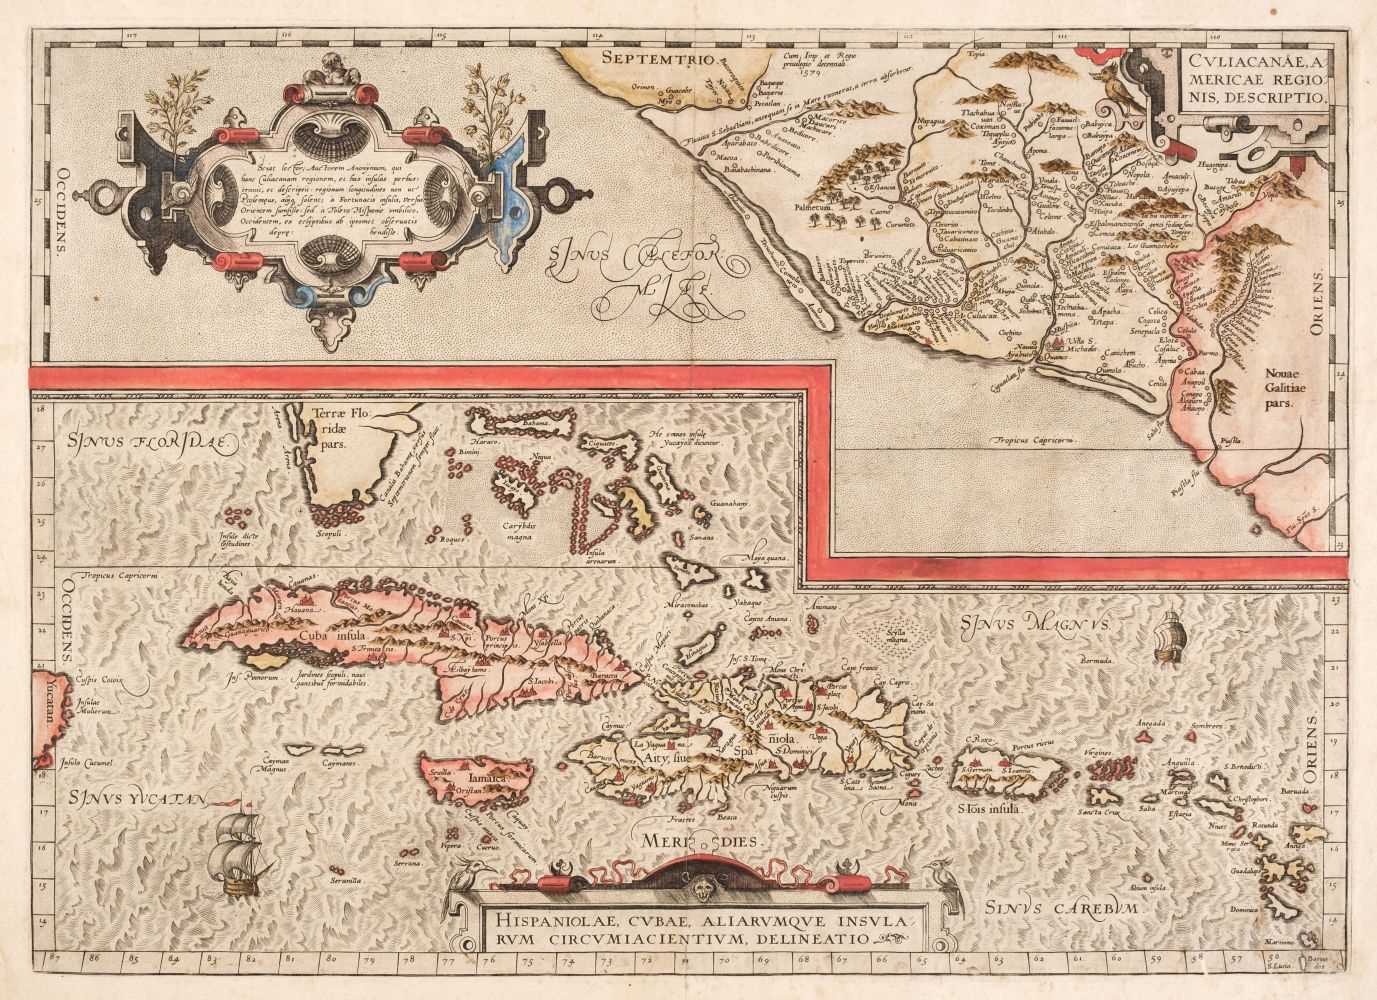 Lot 38 - Cuba and the West Indies. Ortelius (Abraham), Culicanae Americae..., [1579 - 84]